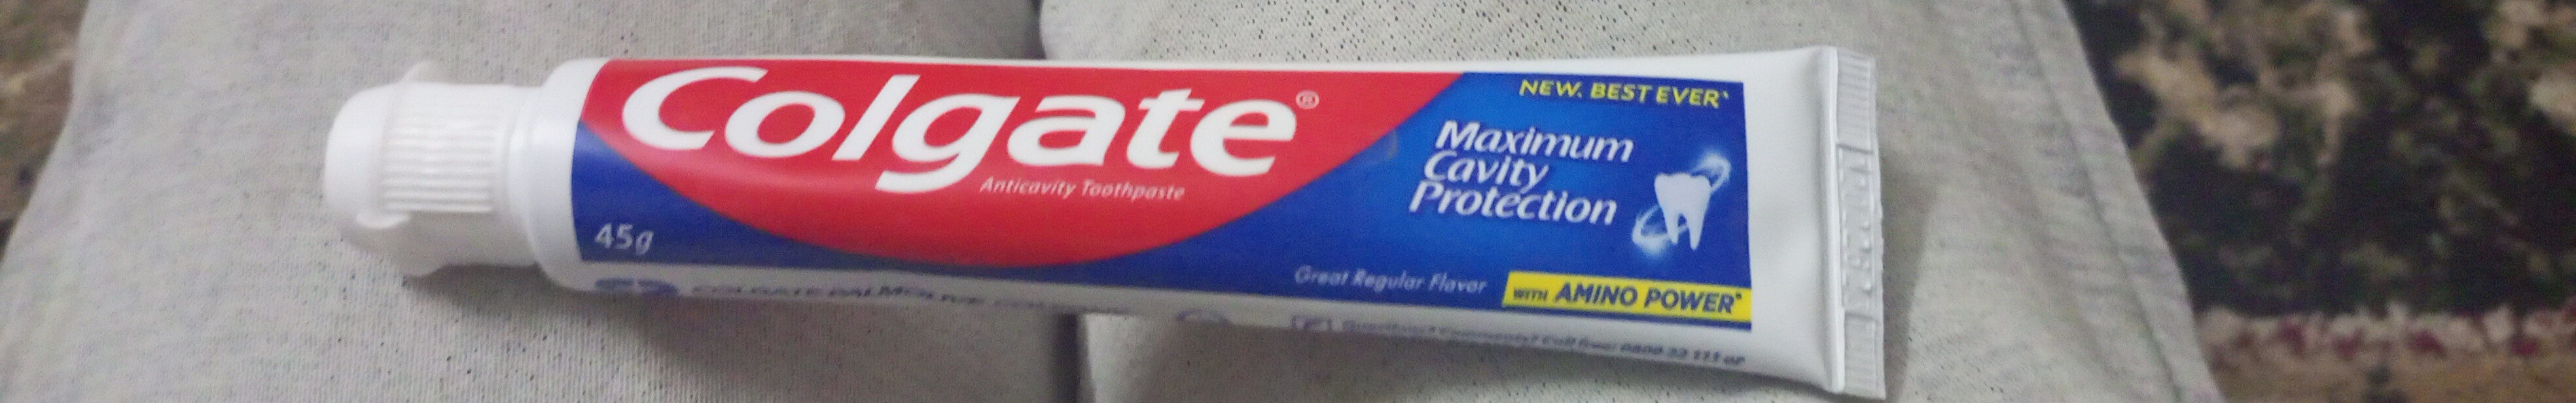 Colgate anticavity toothpaste - Продукт - en